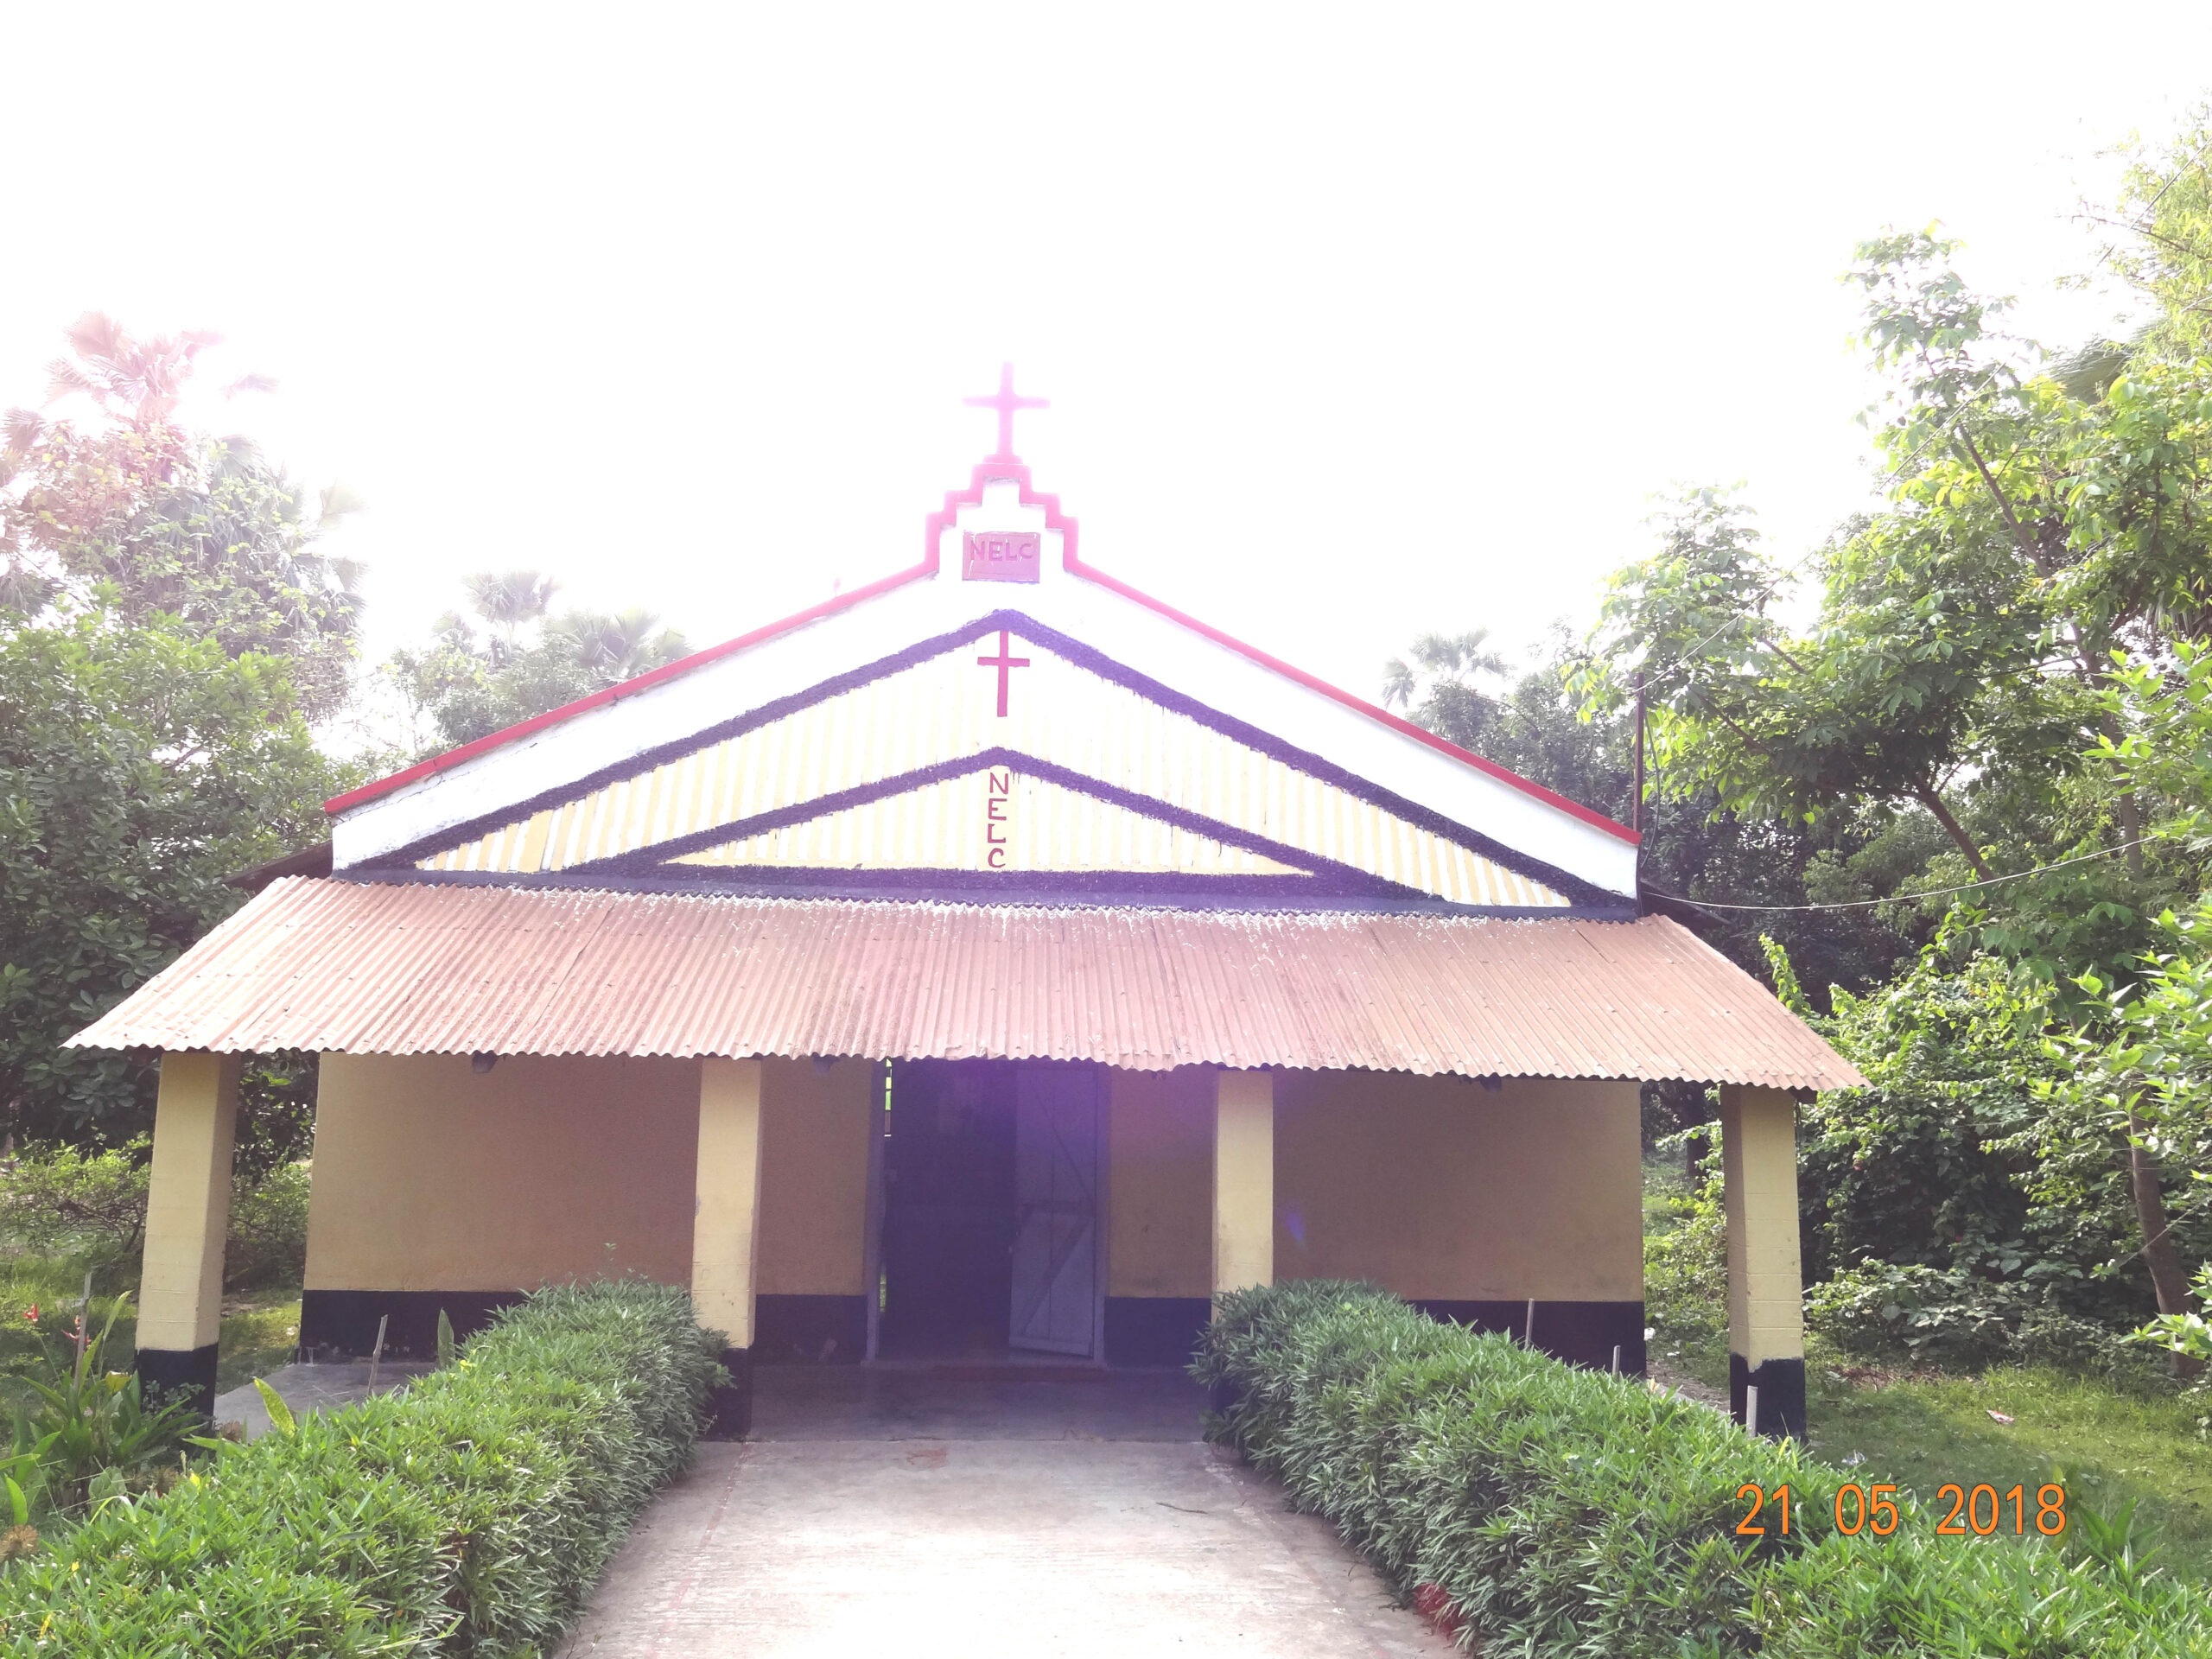 INDIA | MAR. 29, 2023 — Pressure Increasing on Tamilnadu Churches